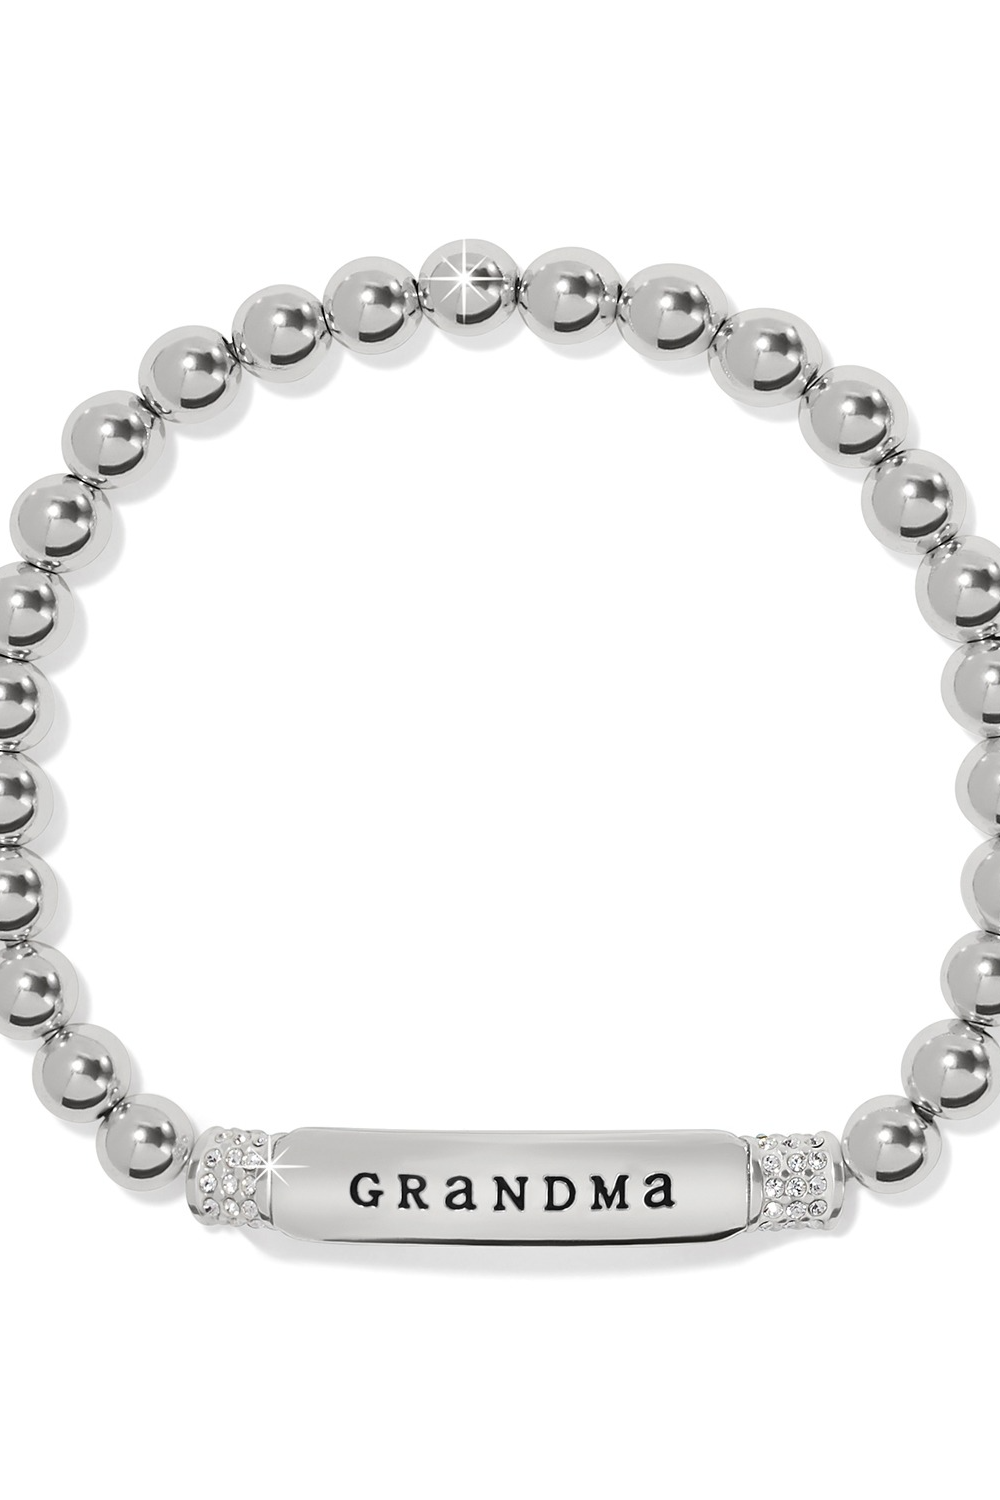 Meridian Grandma Stretch Bracelet